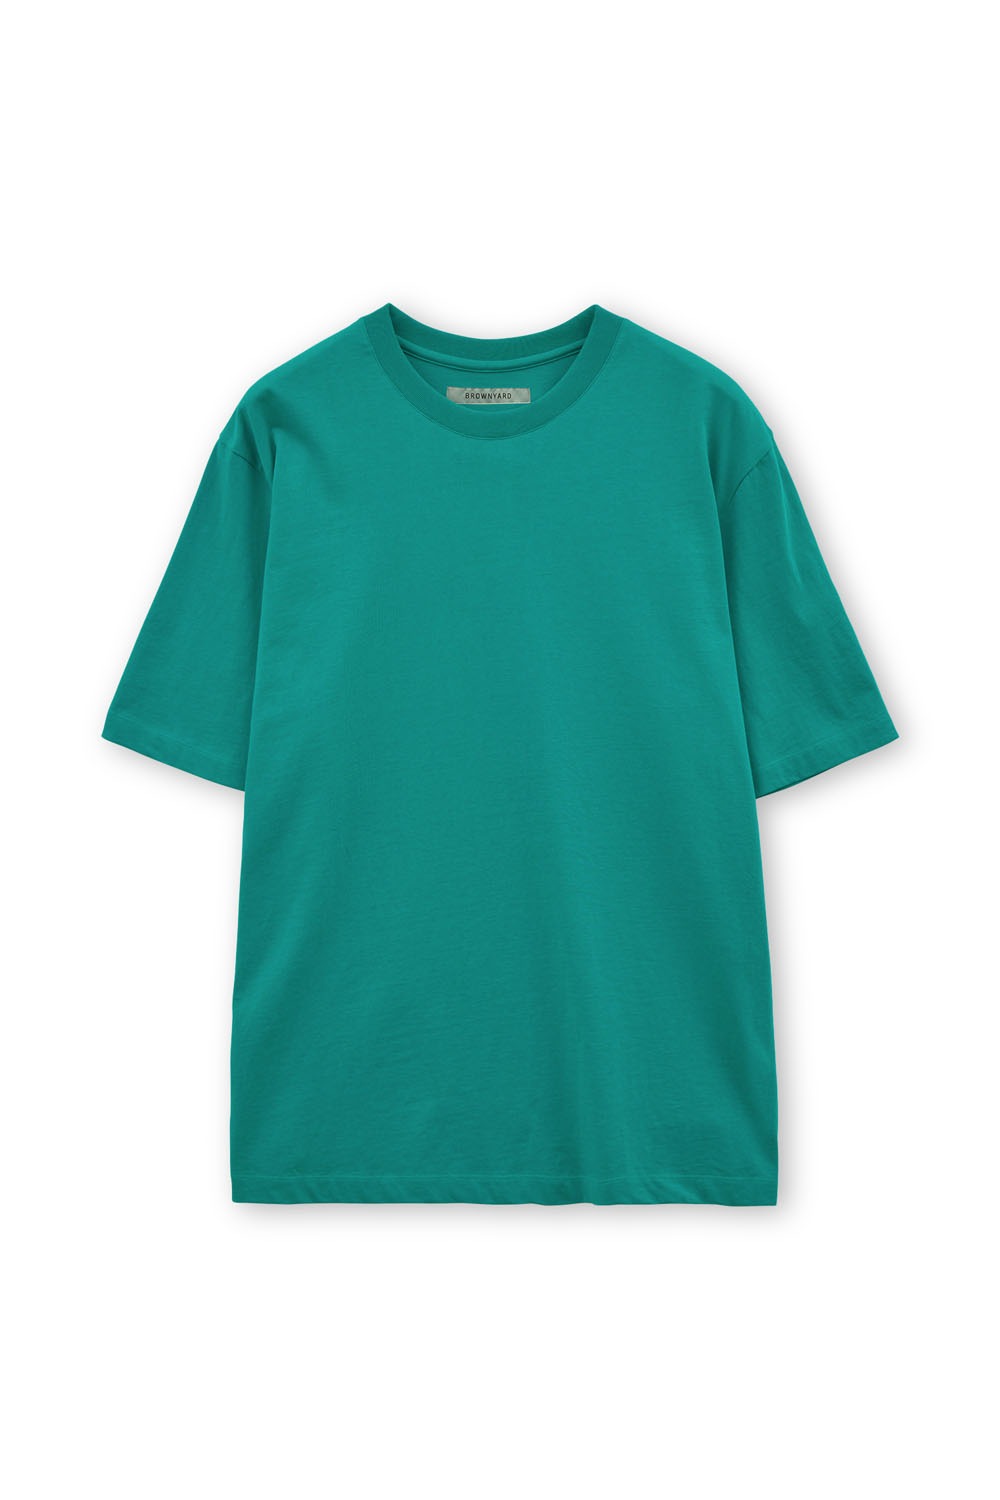 Essential T Shirt-Teal Green